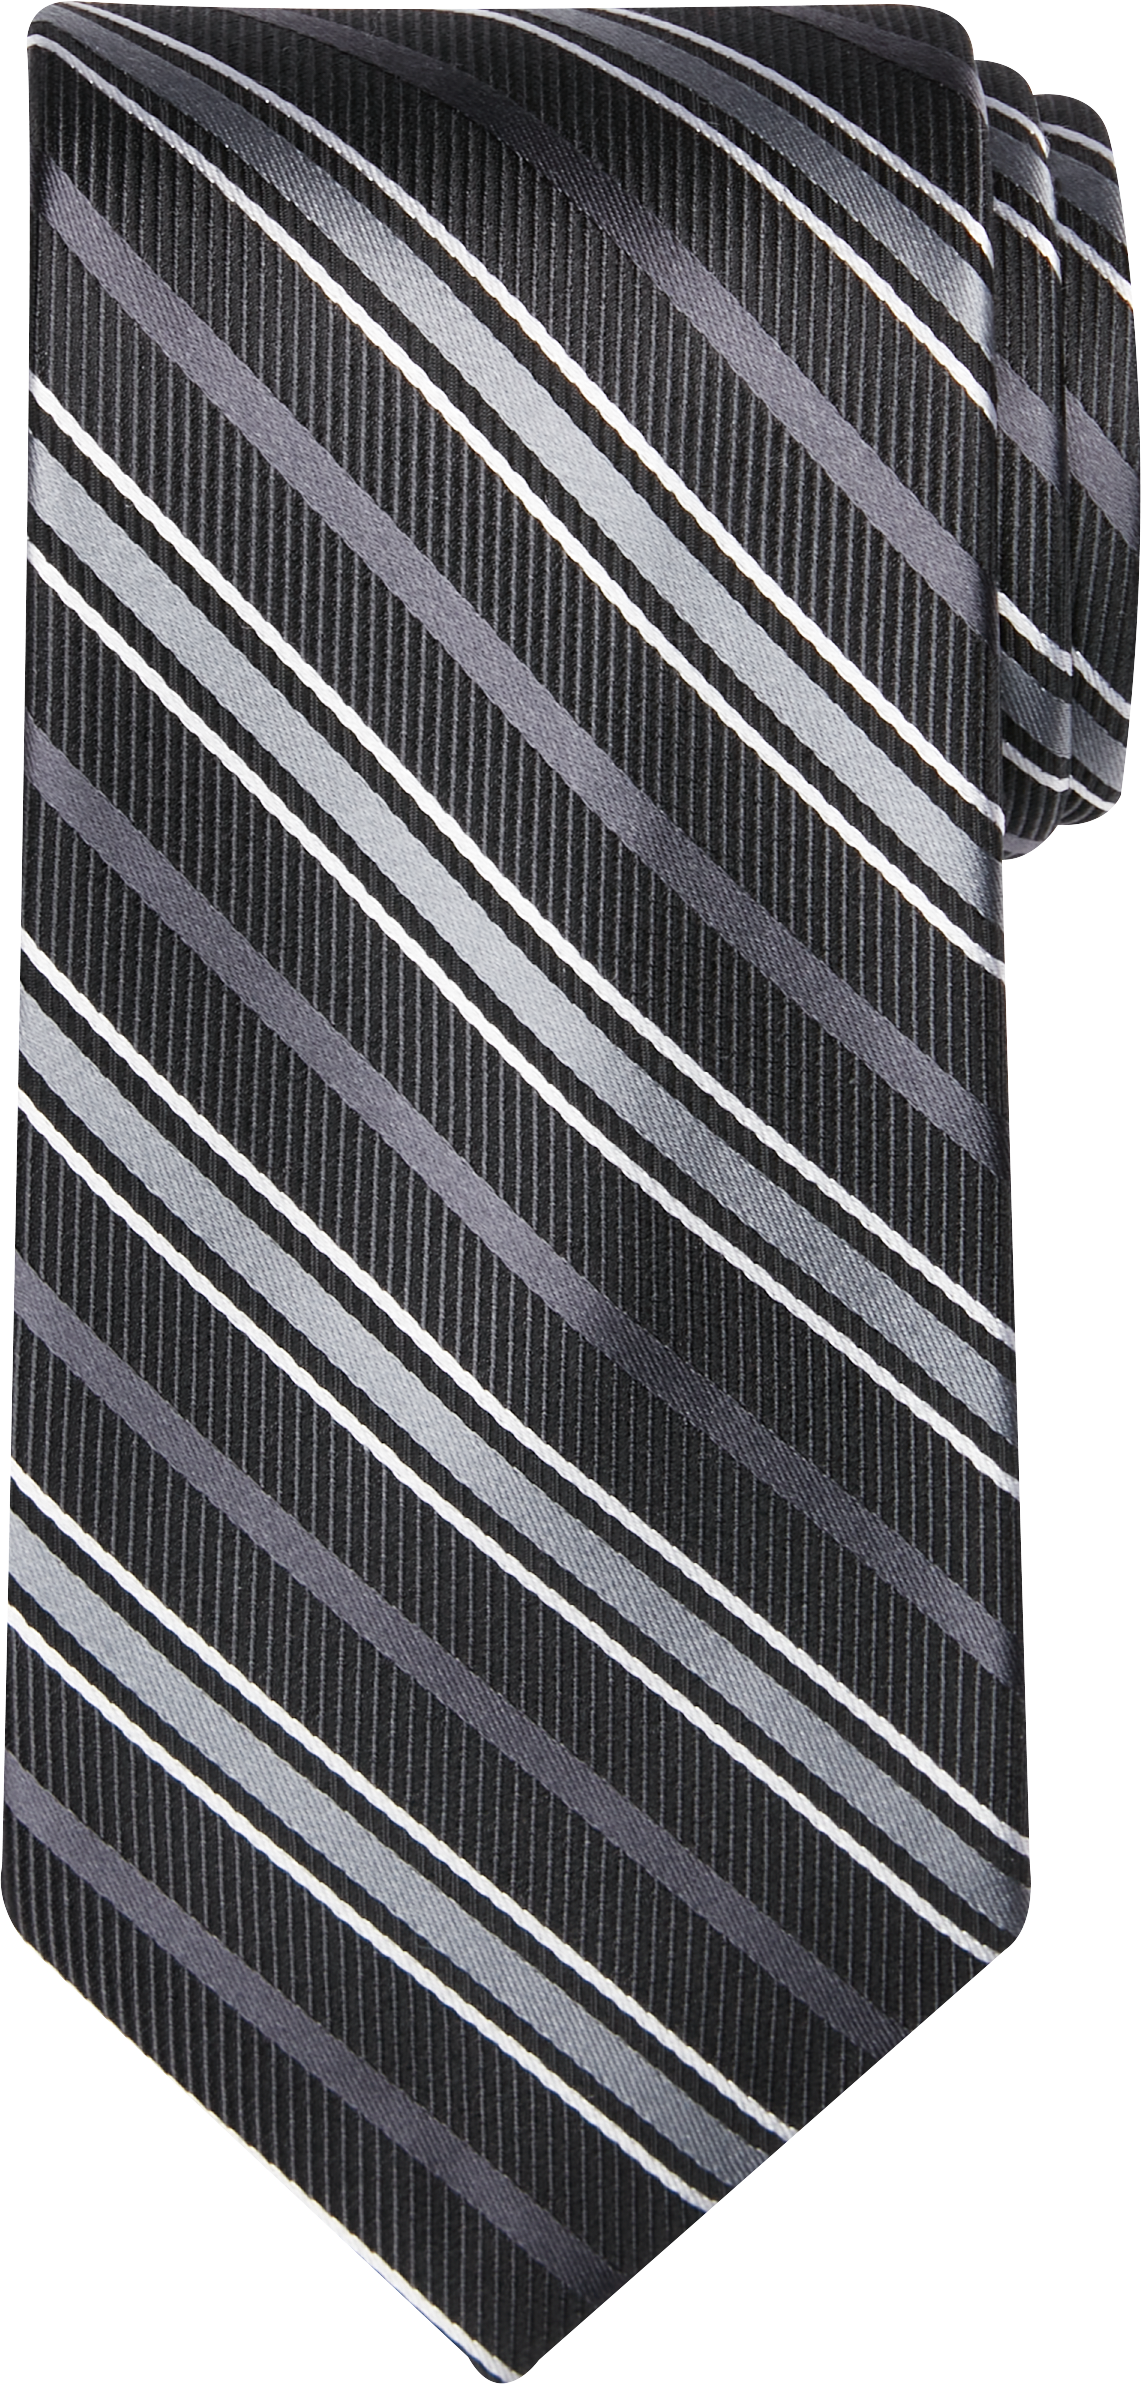 Pronto Uomo Narrow Tie, Black Stripe - Men's Accessories | Men's Wearhouse